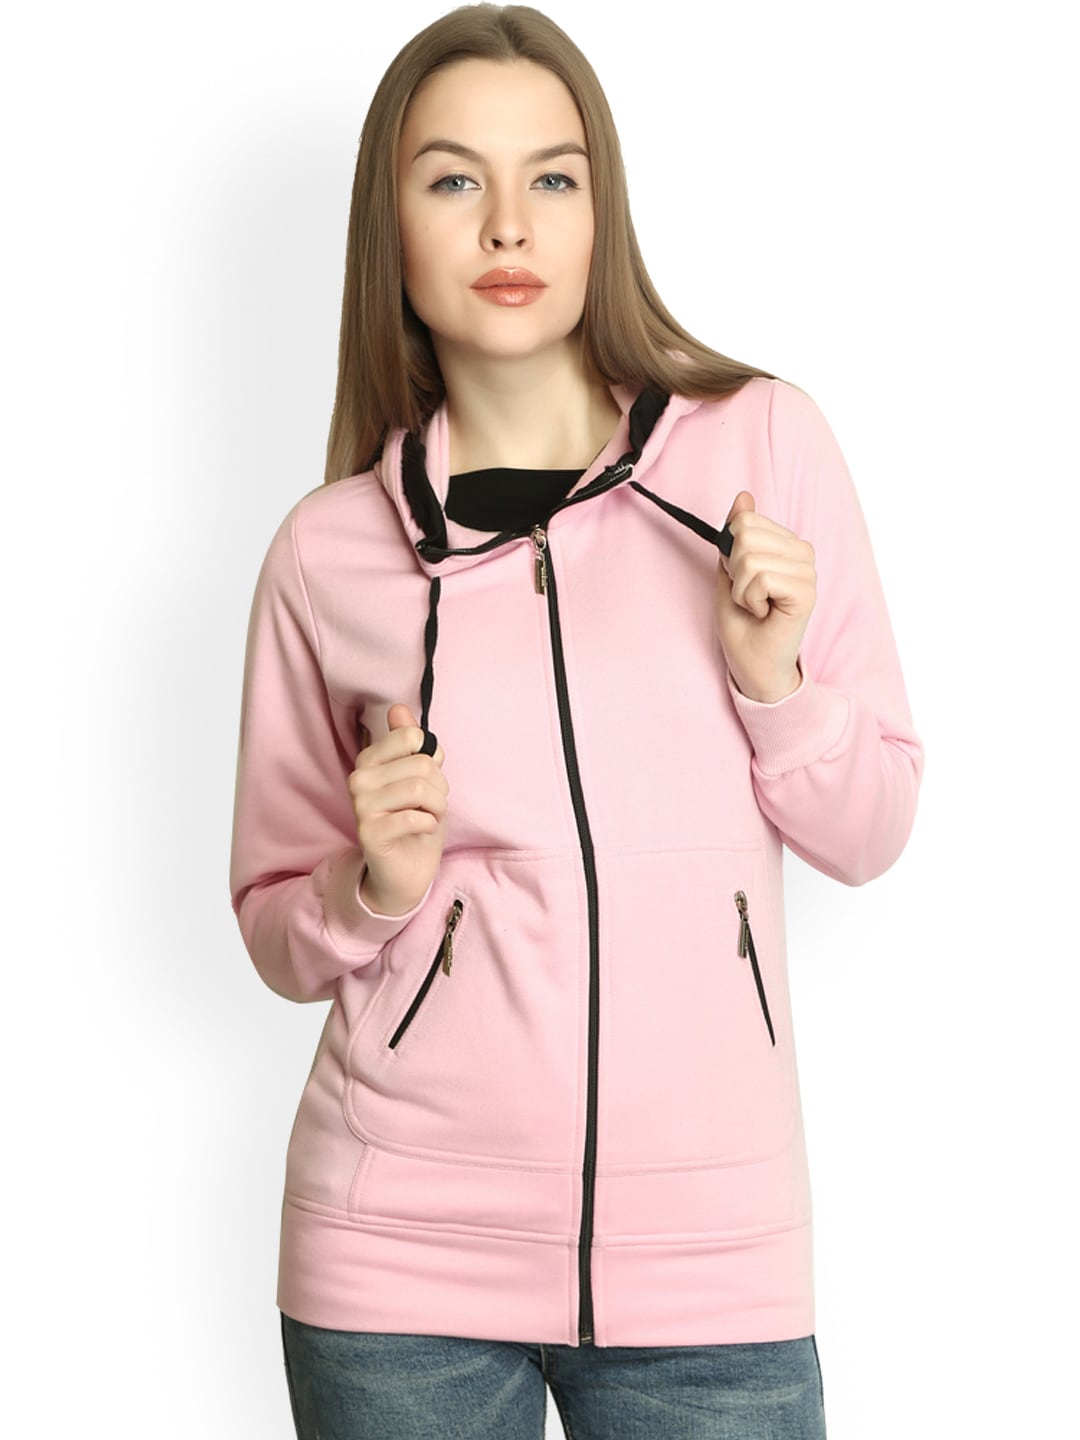 Belle Fille Women Pink Hooded Sweatshirt Price in India